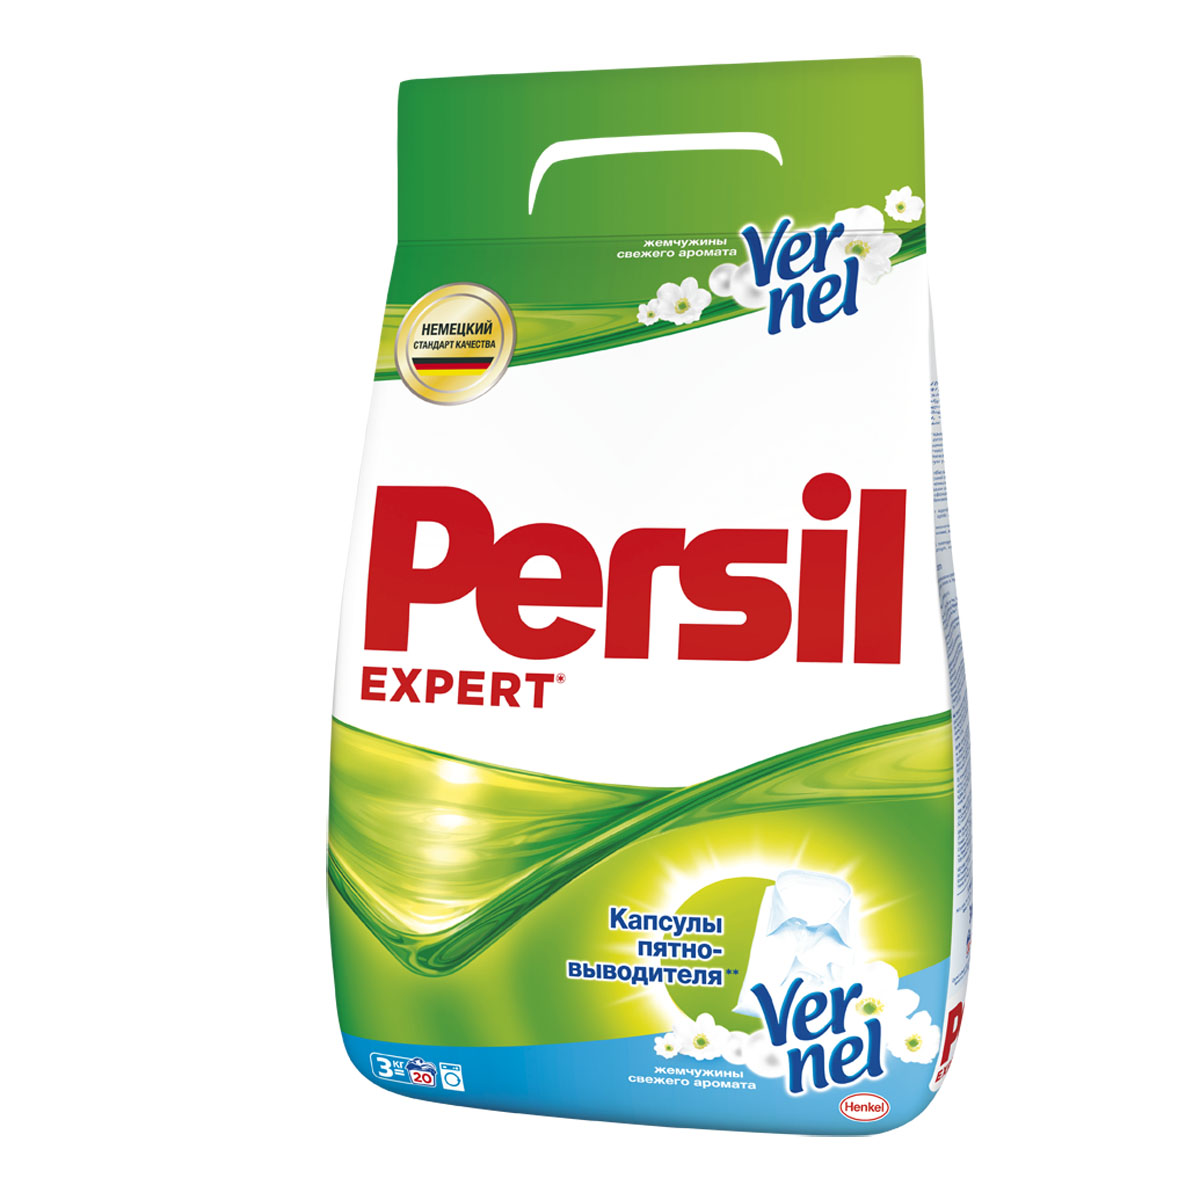   "Persil Expert",   Vernel, 3 